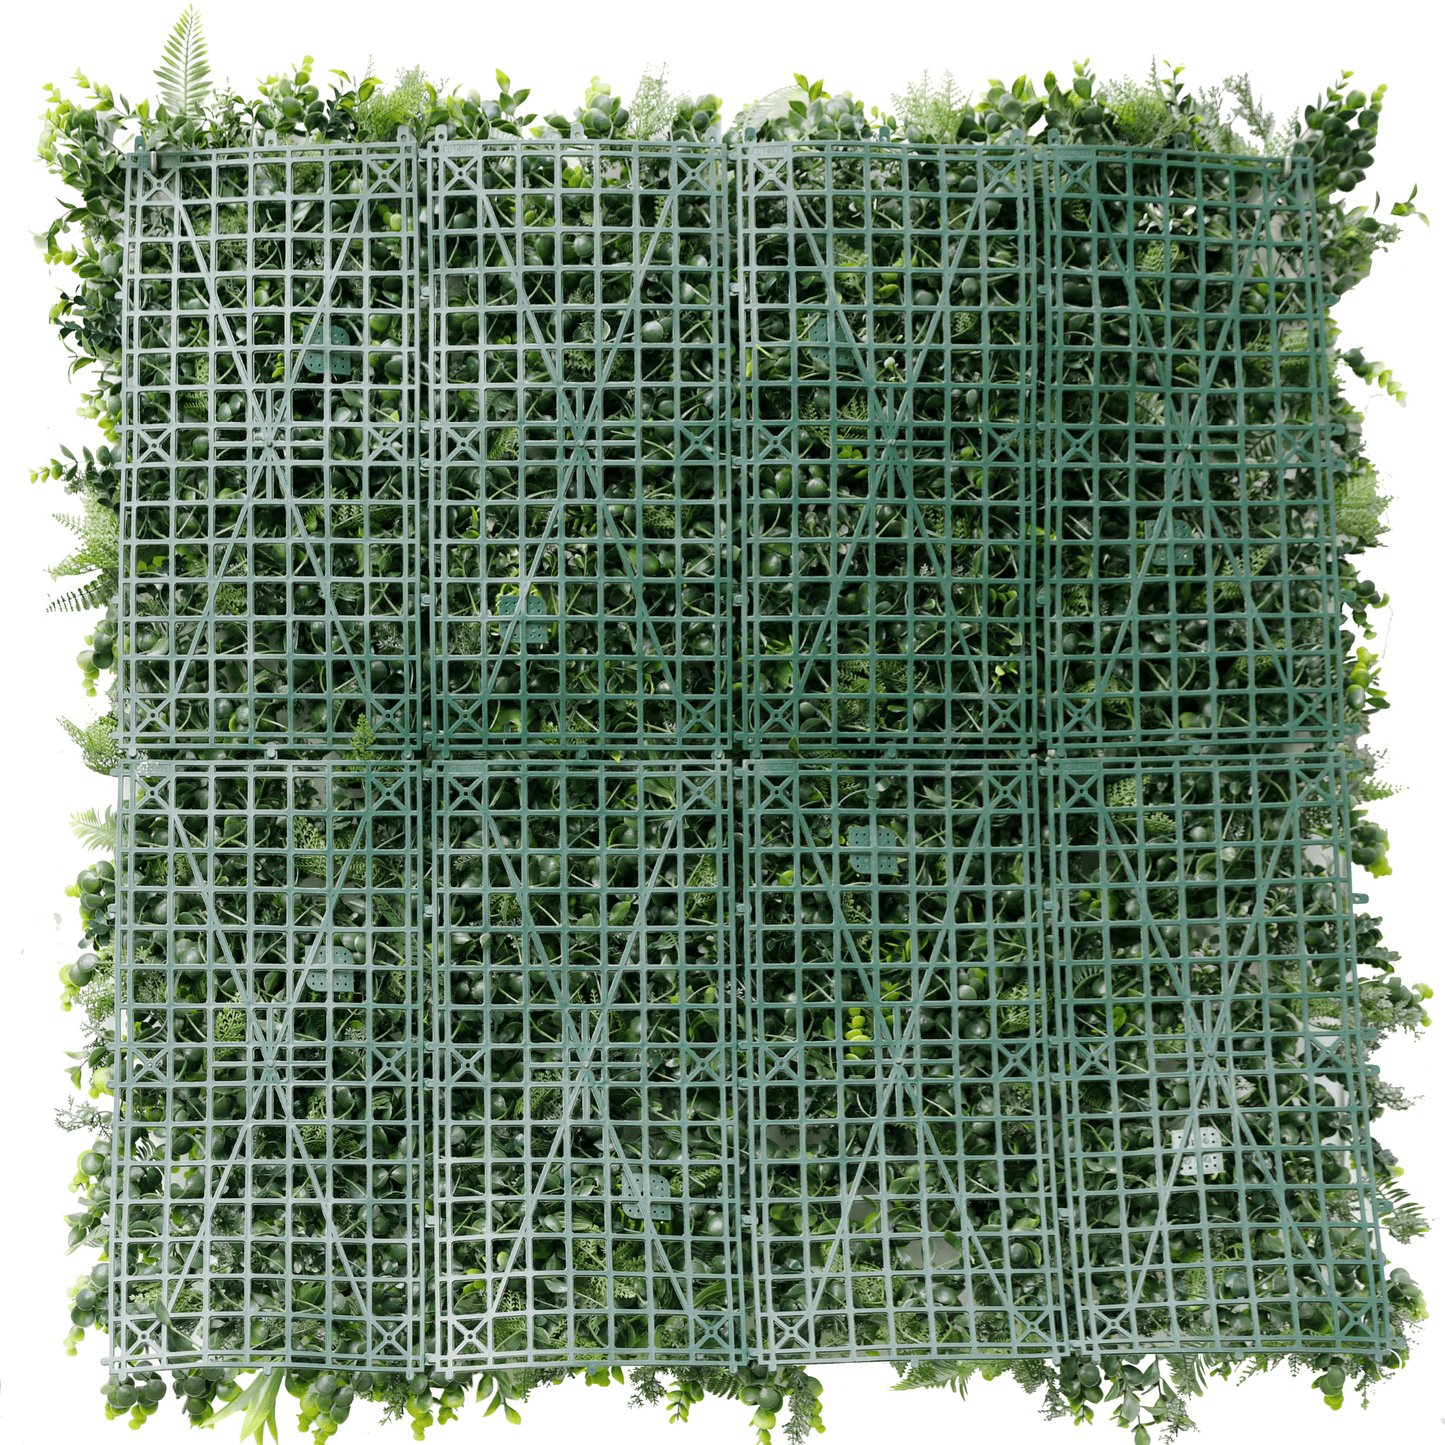 Wild Tropics Artificial Vertical Garden 40" x 40" 11SQ FT